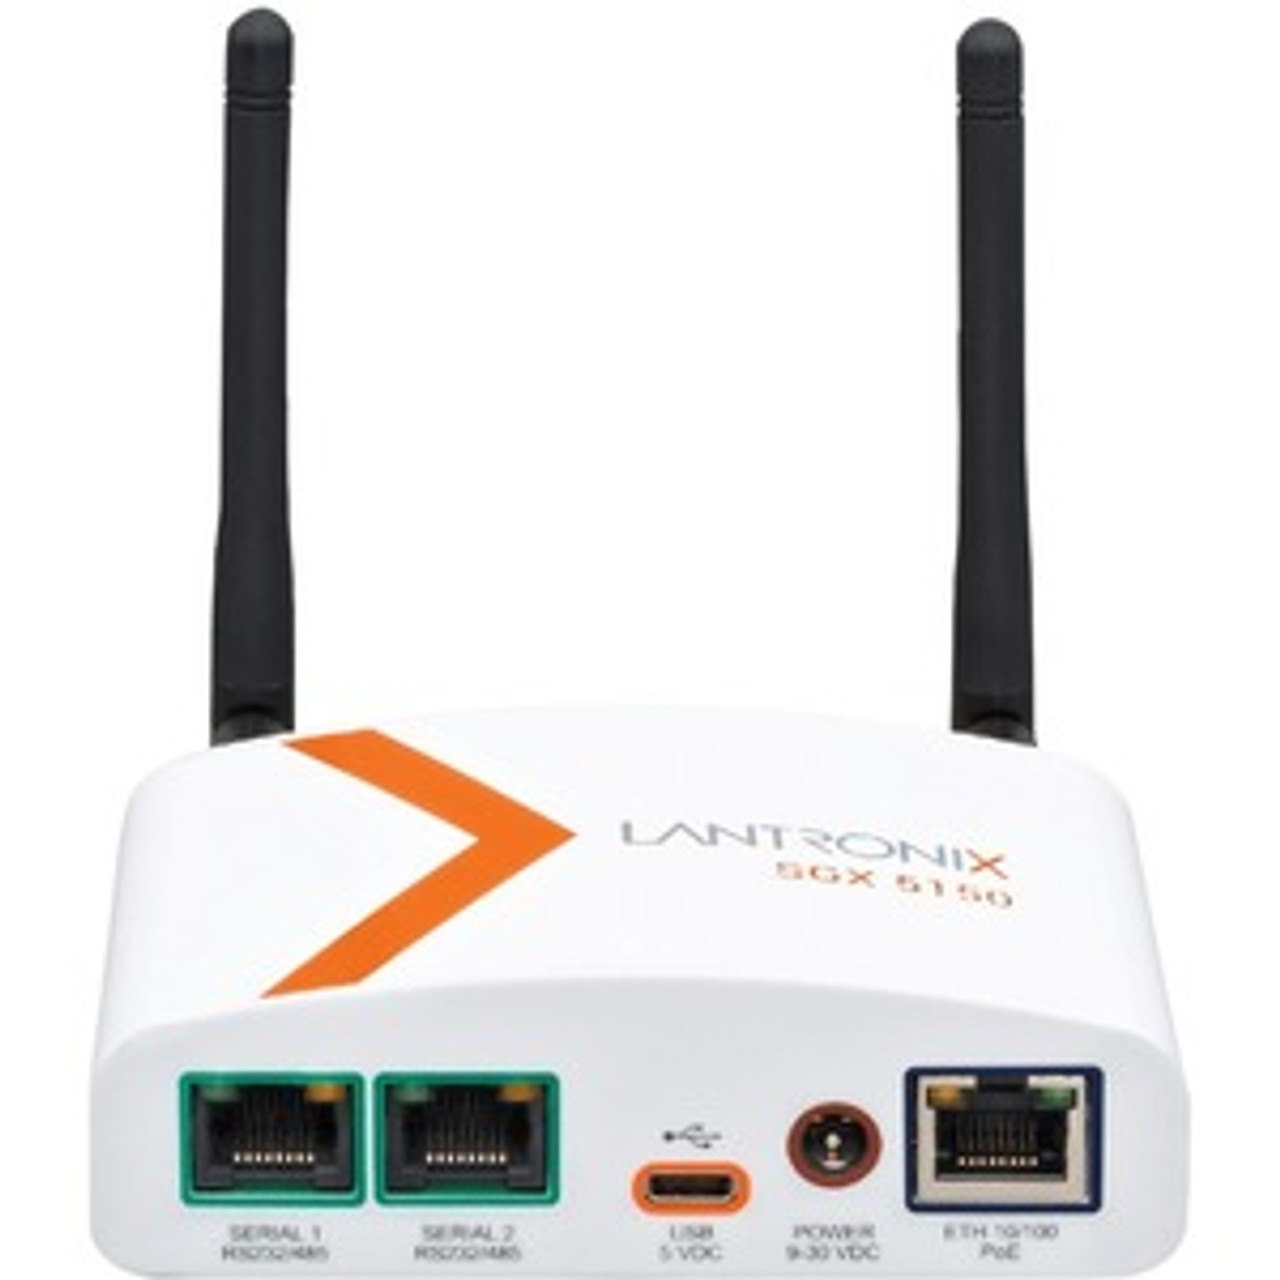 SGX5150123ES Lantronix SGX 5150 IoT Device Gateway 802.11a/b/g/n/ac Dual Band desktop wireless Router (Refurbished)